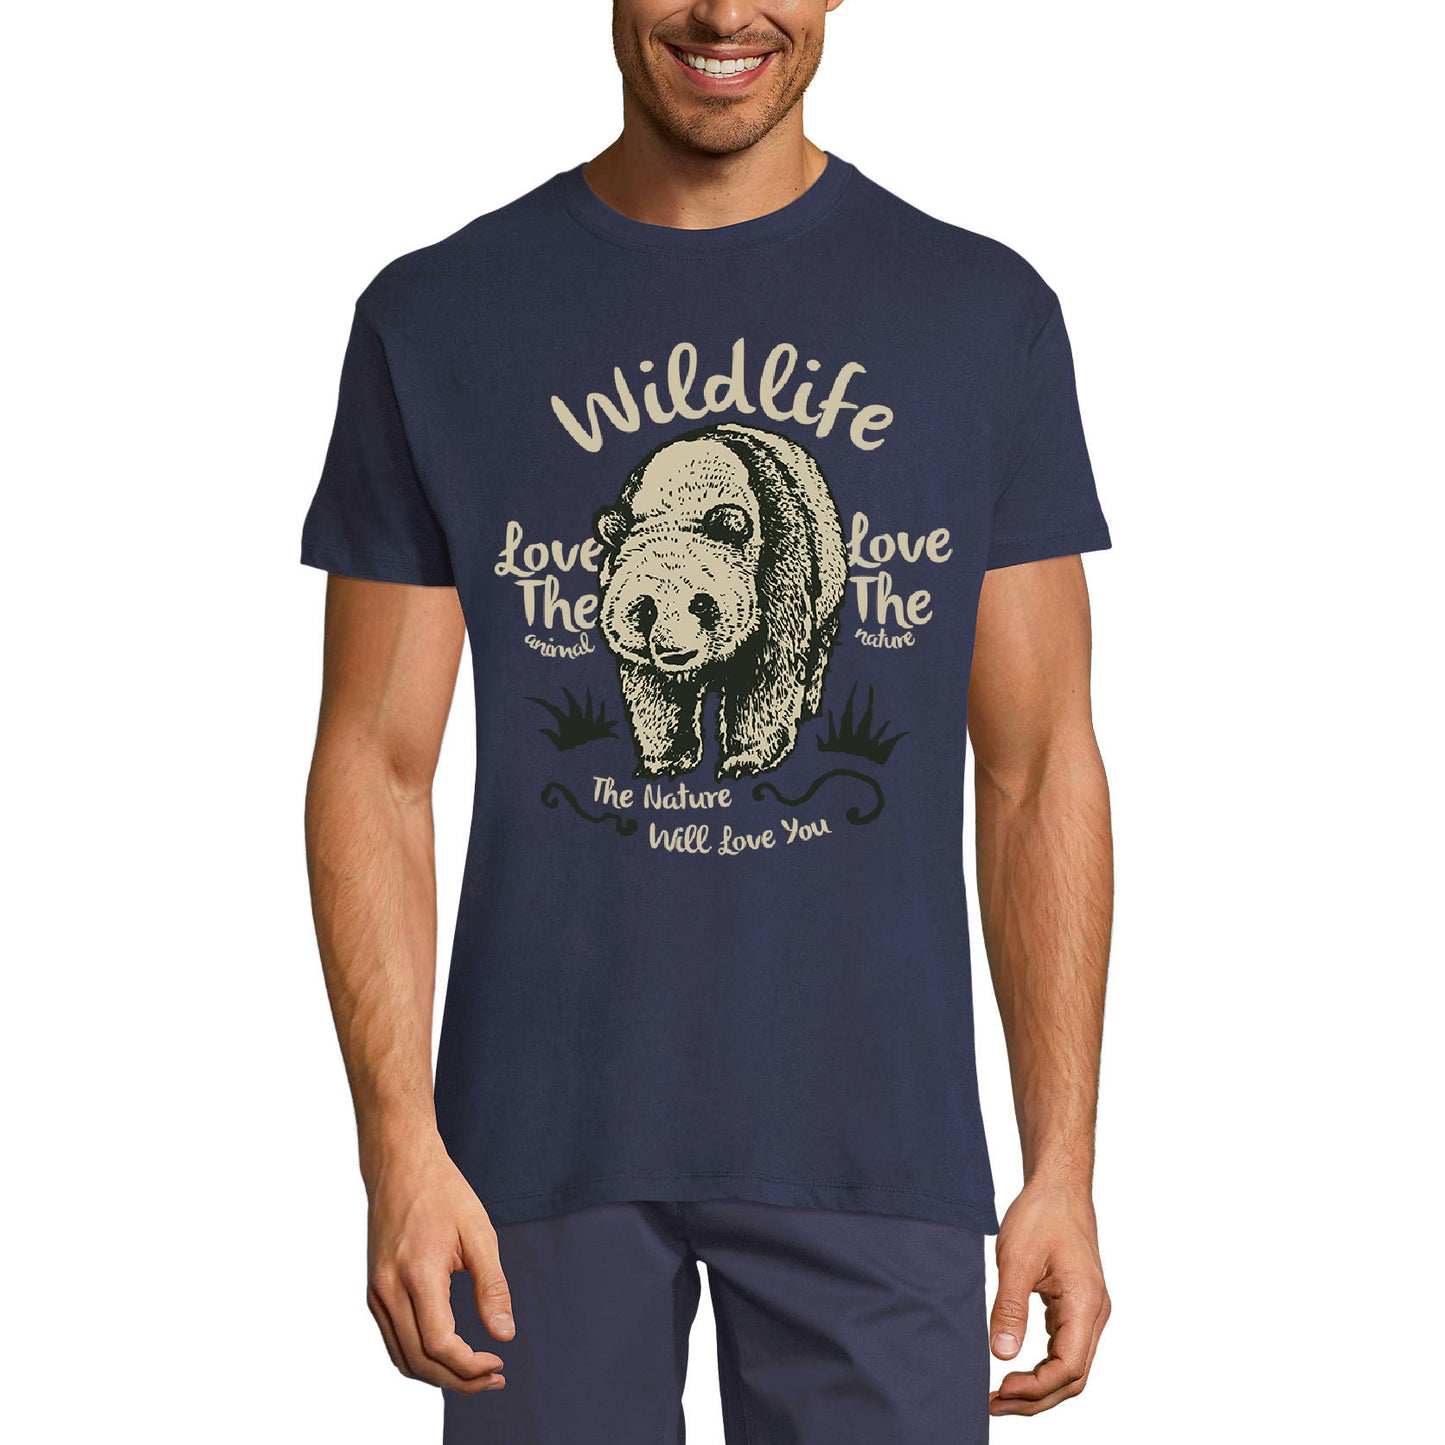 ULTRABASIC Men's Graphic T-Shirt The Nature Will Love You - Panda Vintage Shirt